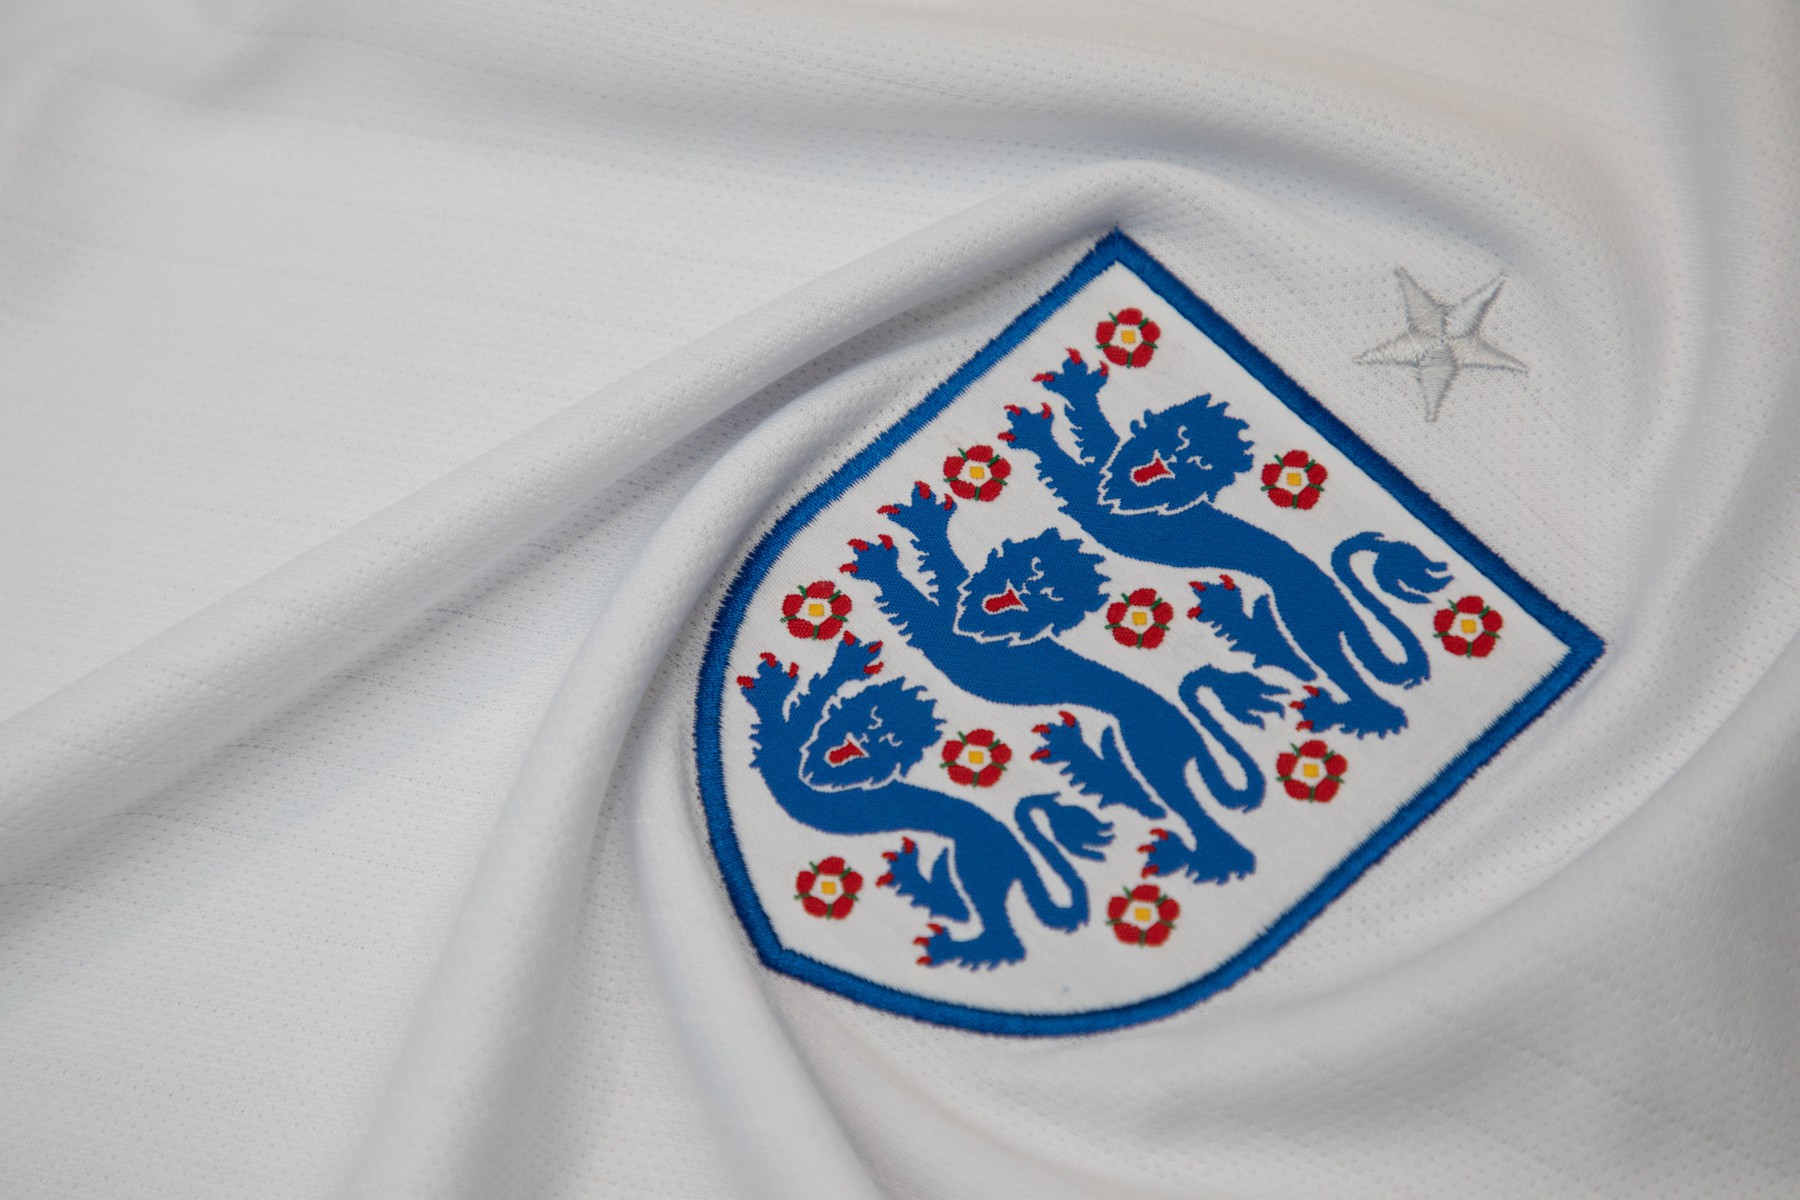 The FA launches 16-person England all-pro FIFA20 tournament - Insider Sport